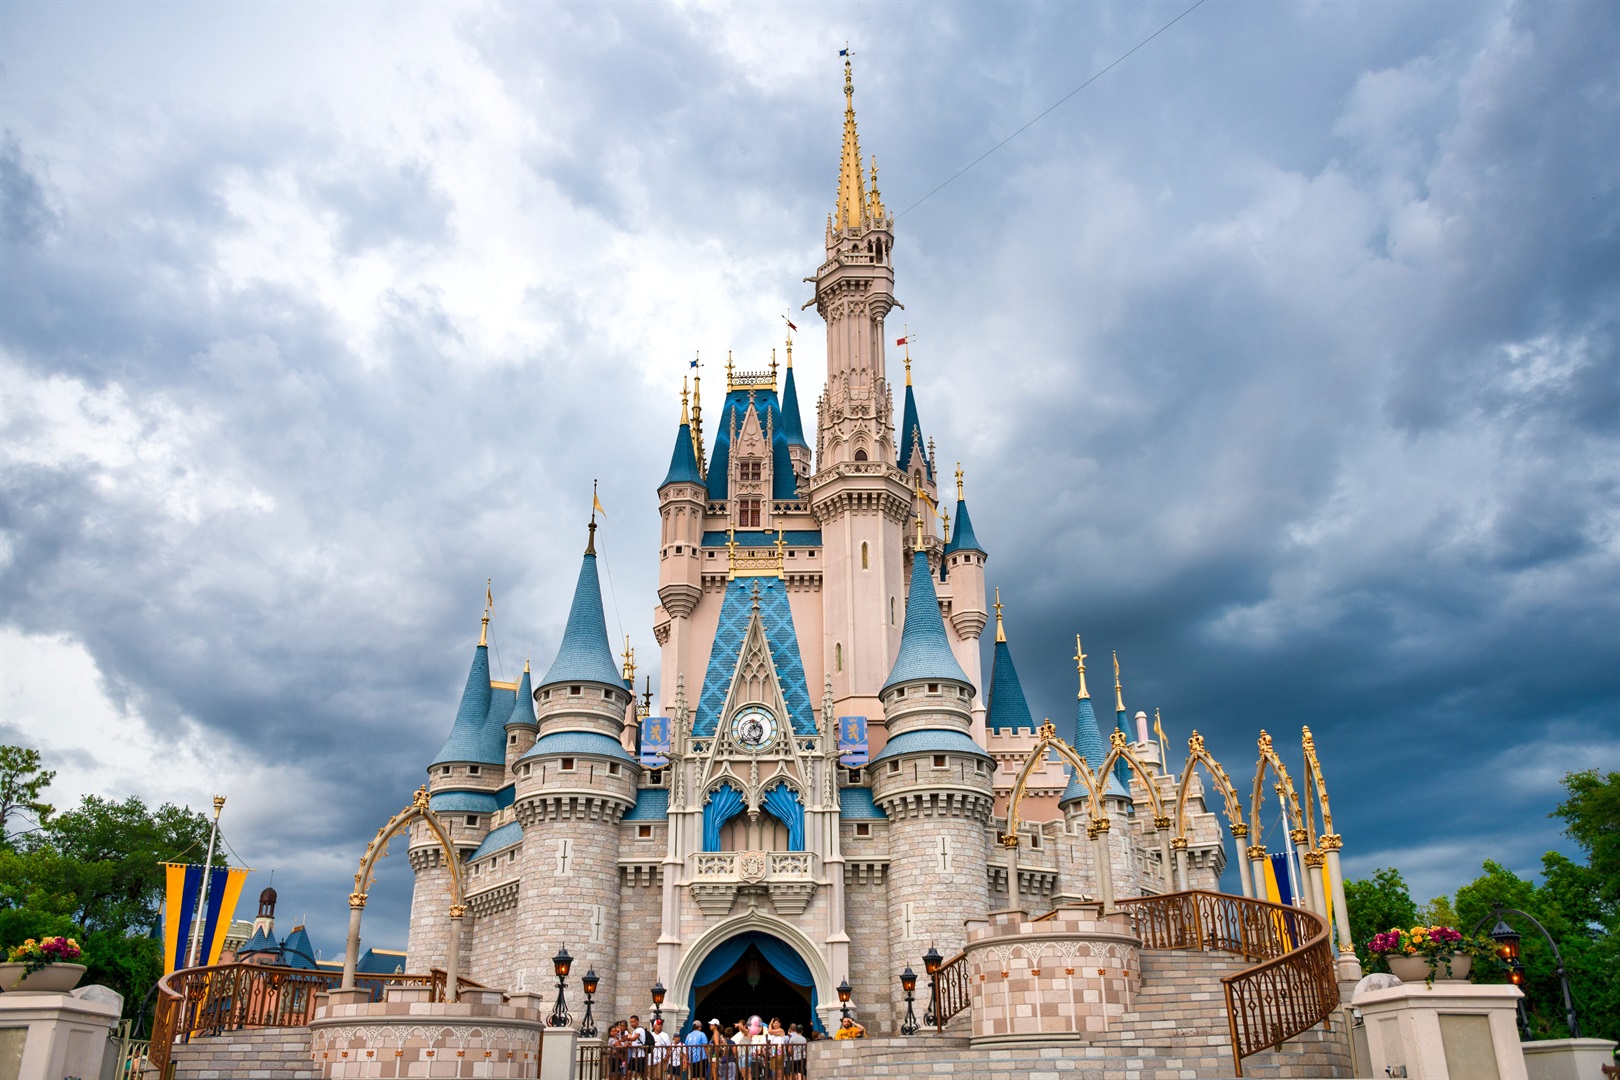 Cinderella Castle at Walt Disney World Resort, Florida.